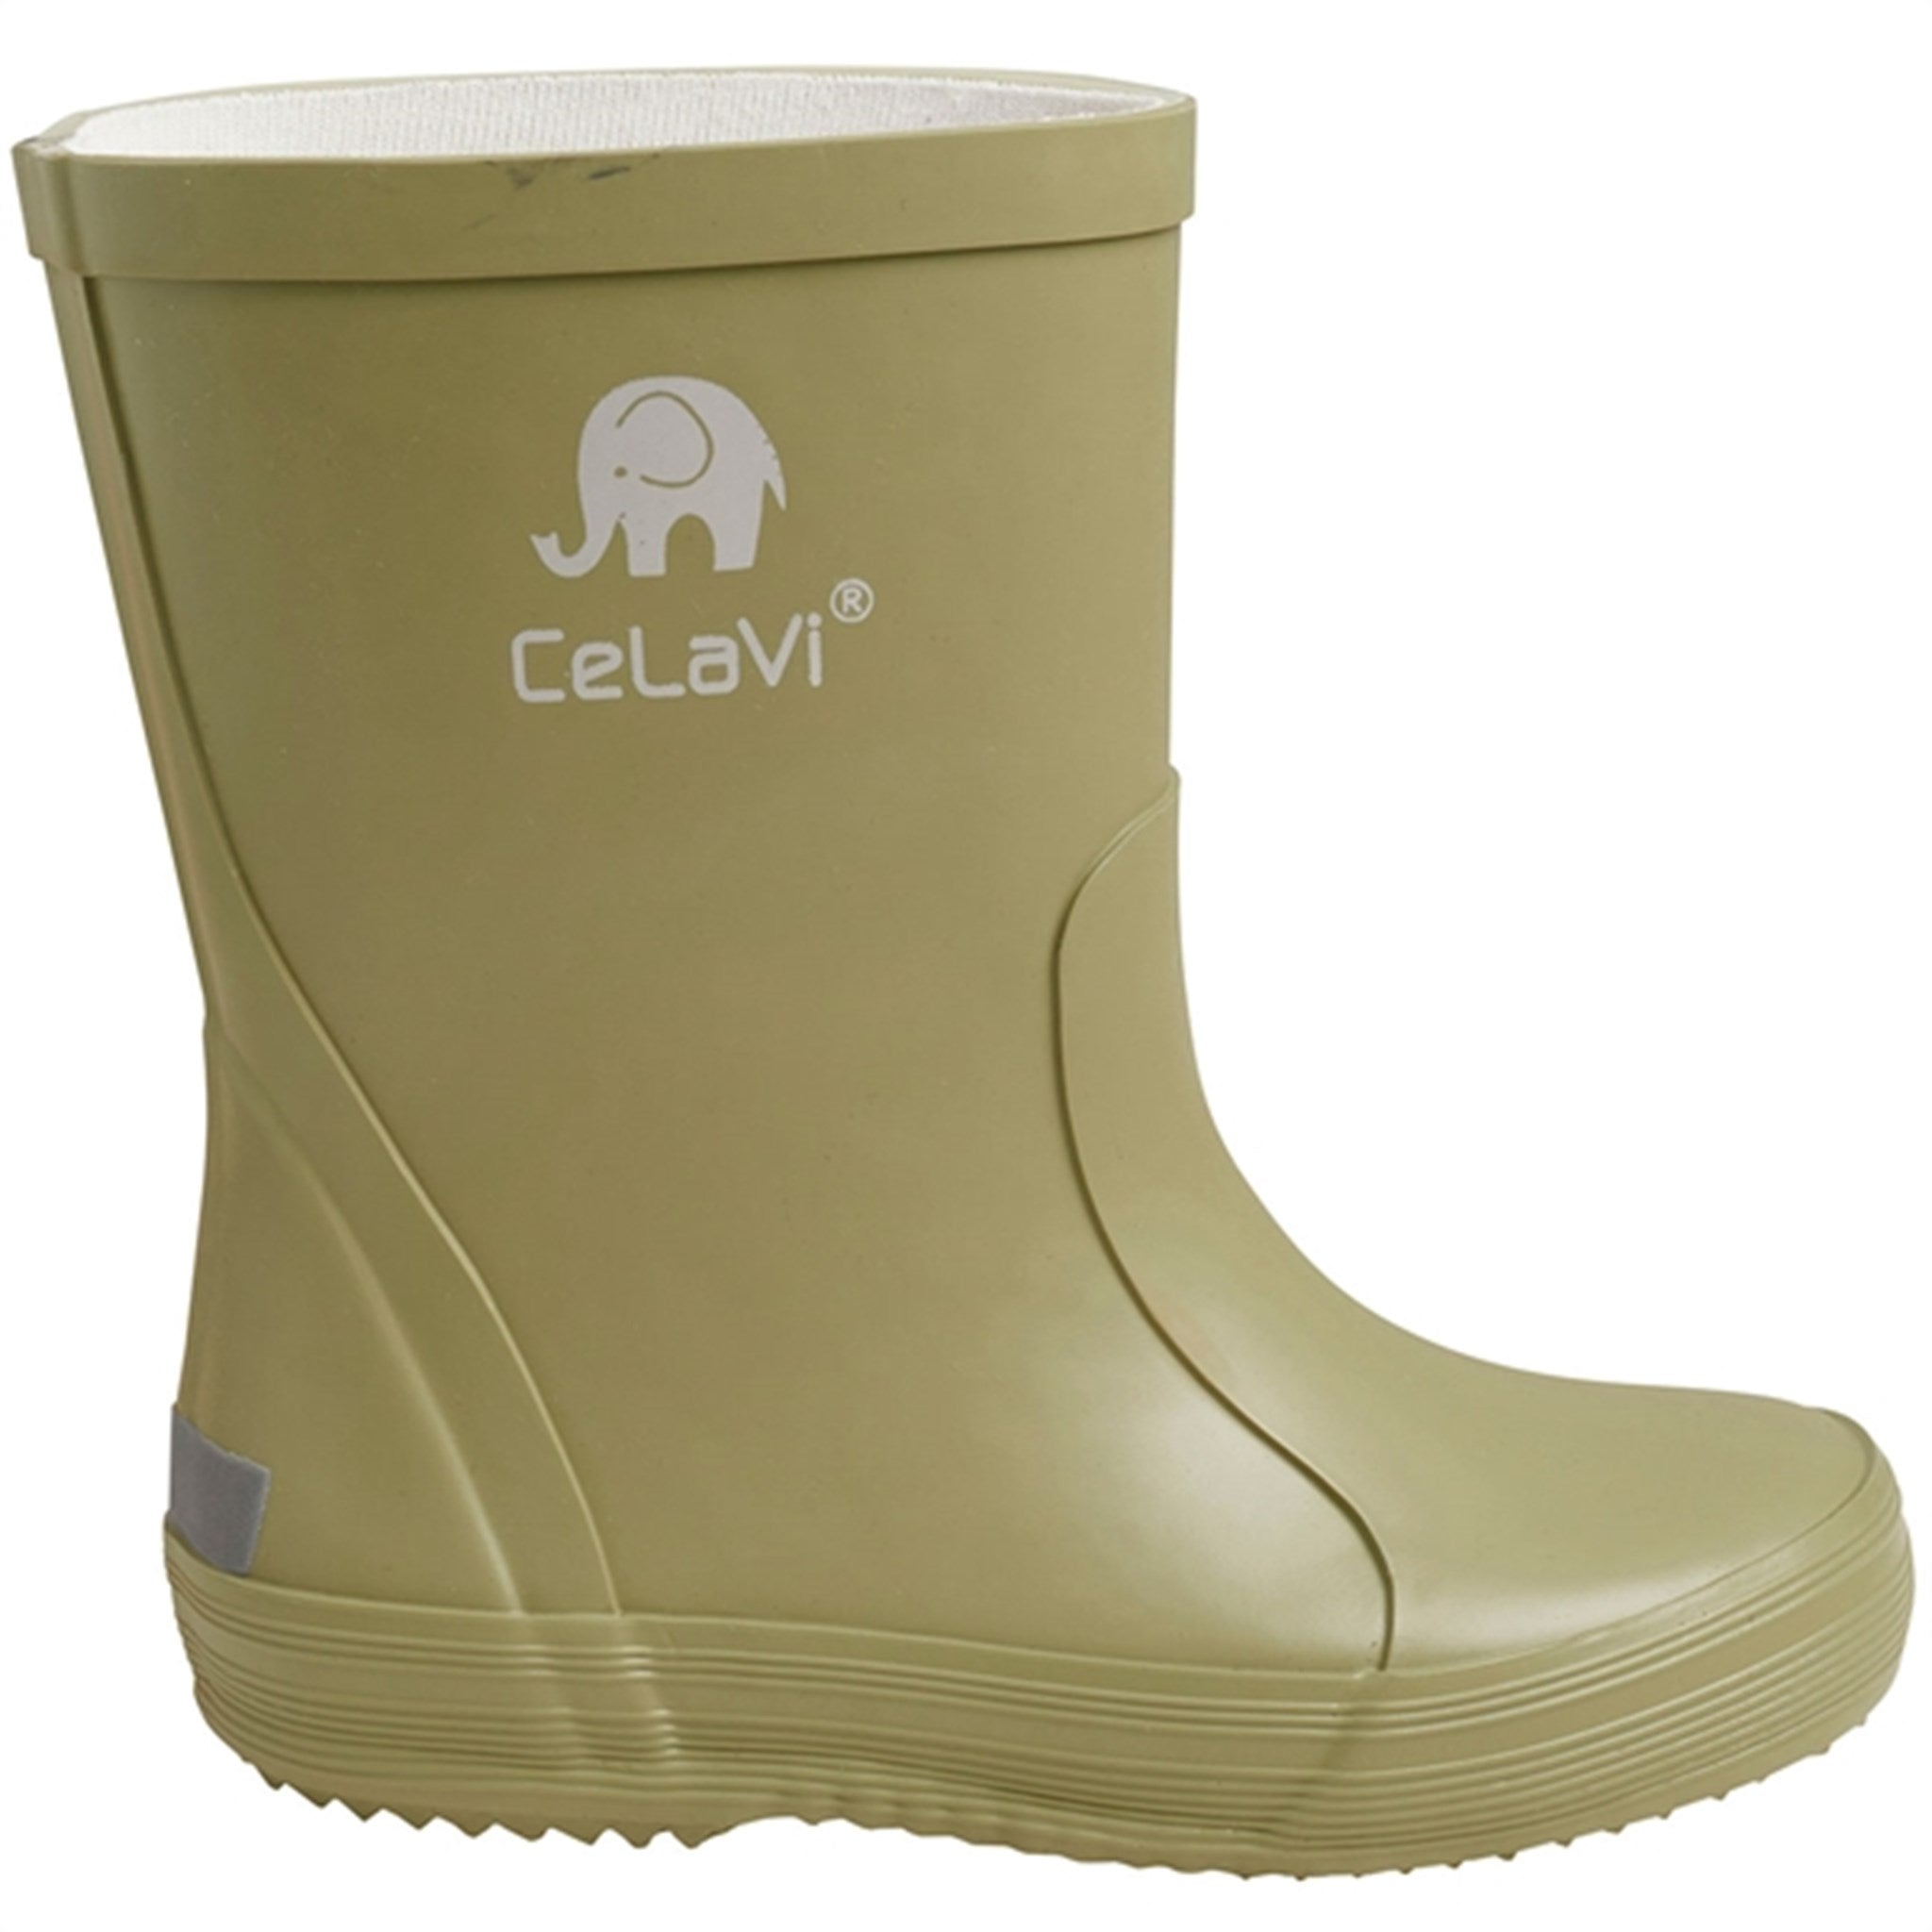 CeLaVi Wellies New Basic Boot Khaki 2